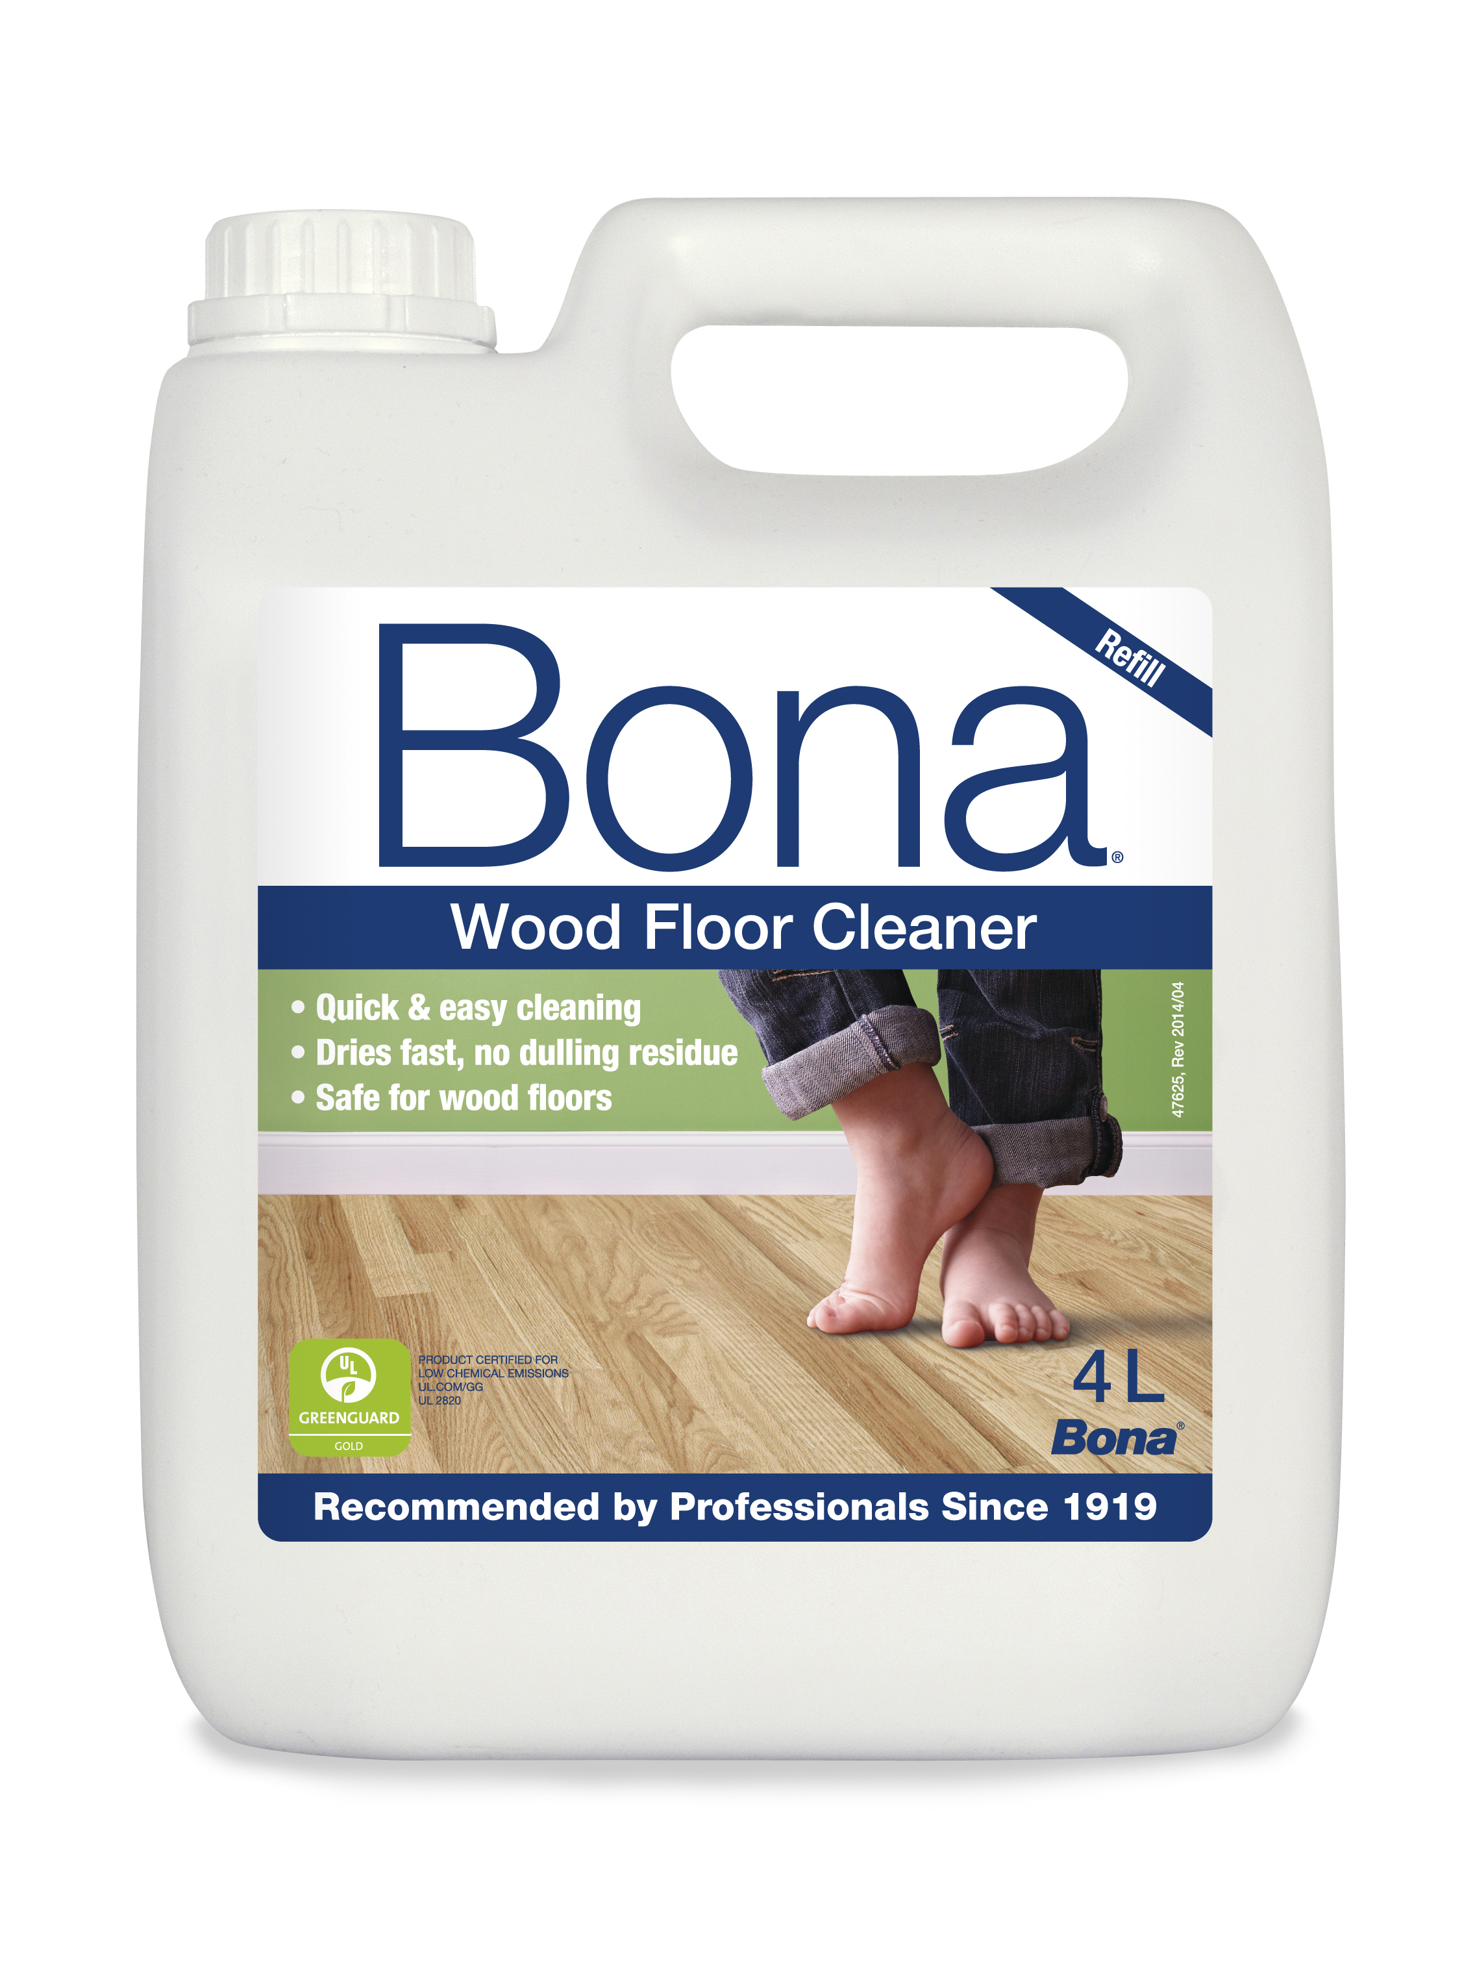 Bona Wood Floor Cleaner By Vanilla, Bona Hardwood Floor Cleaning Spray Mop